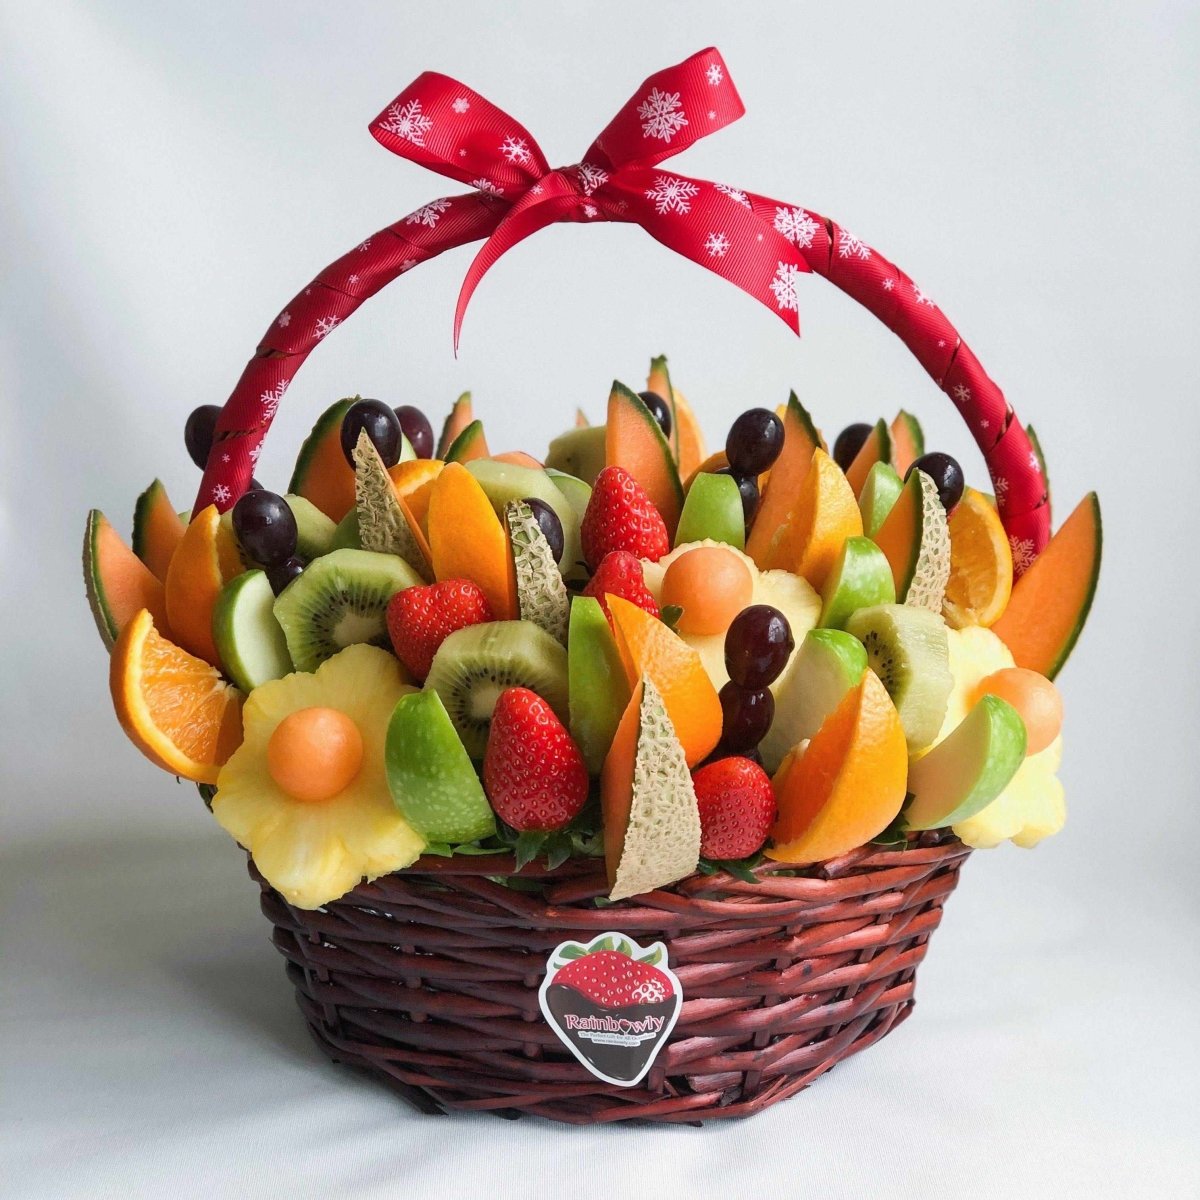 Fruit Basket Singapore -Sunny Garden Fresh Fruit Arrangements( 3 days advance preorder) - Rainbowly Fresh Fruit Gift and Flower Arrangments